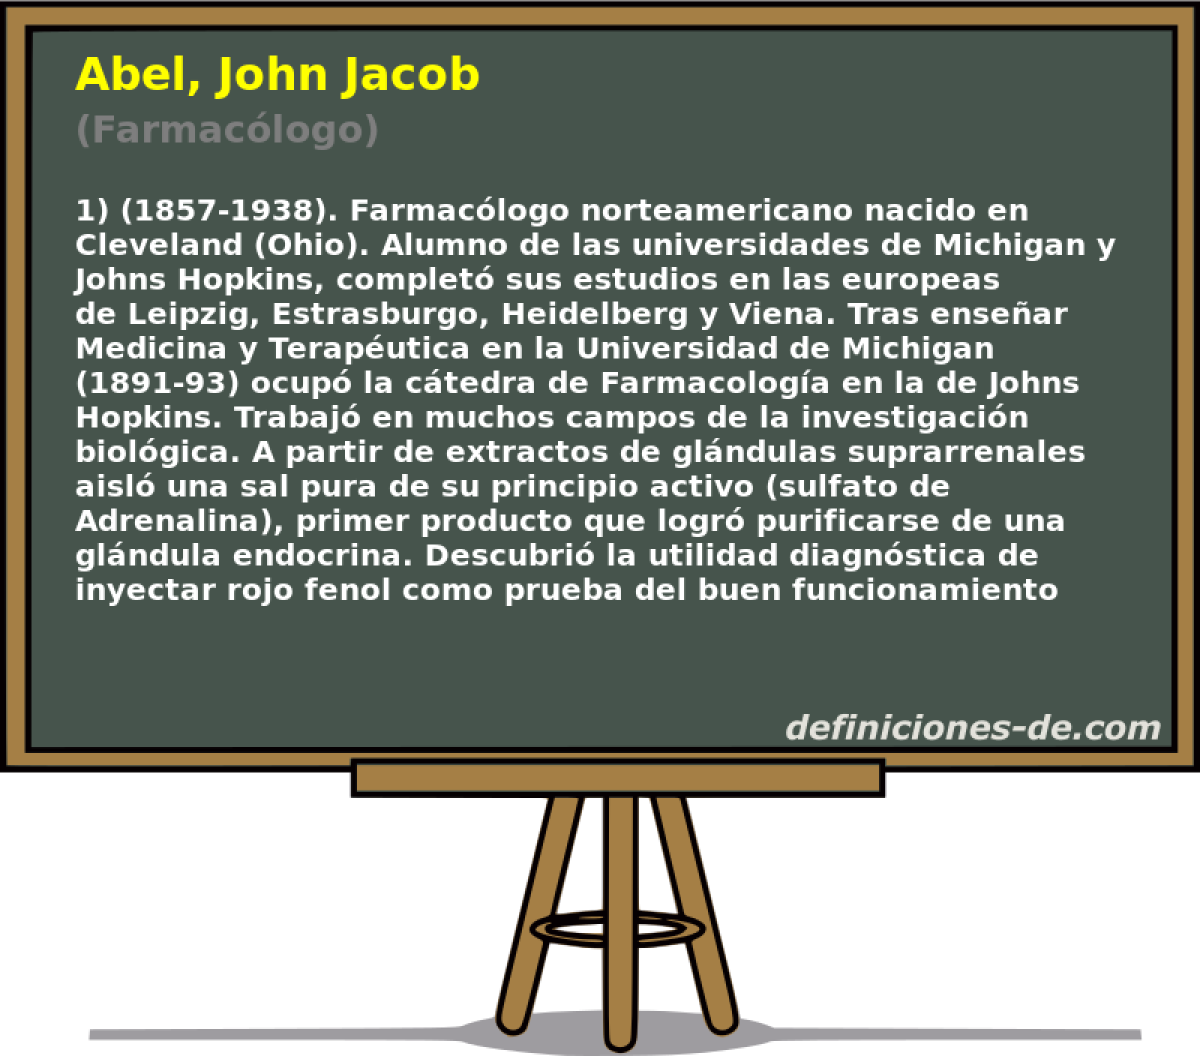 Abel, John Jacob (Farmaclogo)